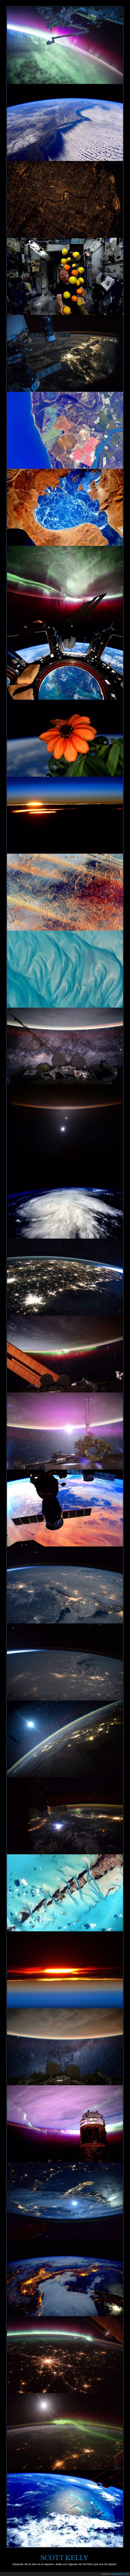 Scott Kelly,astronauta,tierra,espacio,aurora boreal,nasa